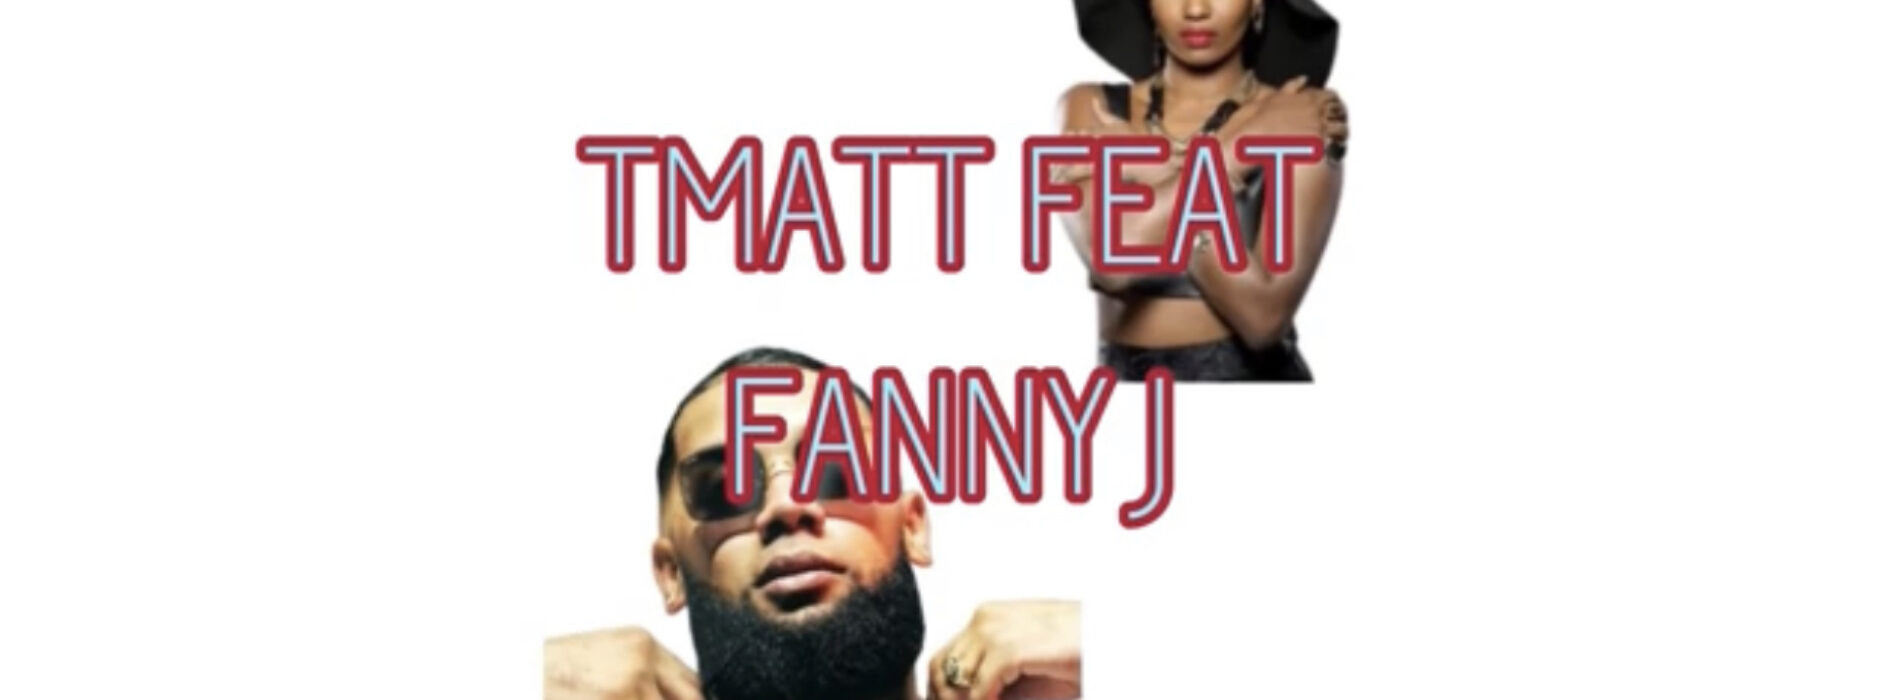 TMATT feat FANNY J – « sexy gayana « – décembre 2021👊🏼😜☺️👍🏼😍